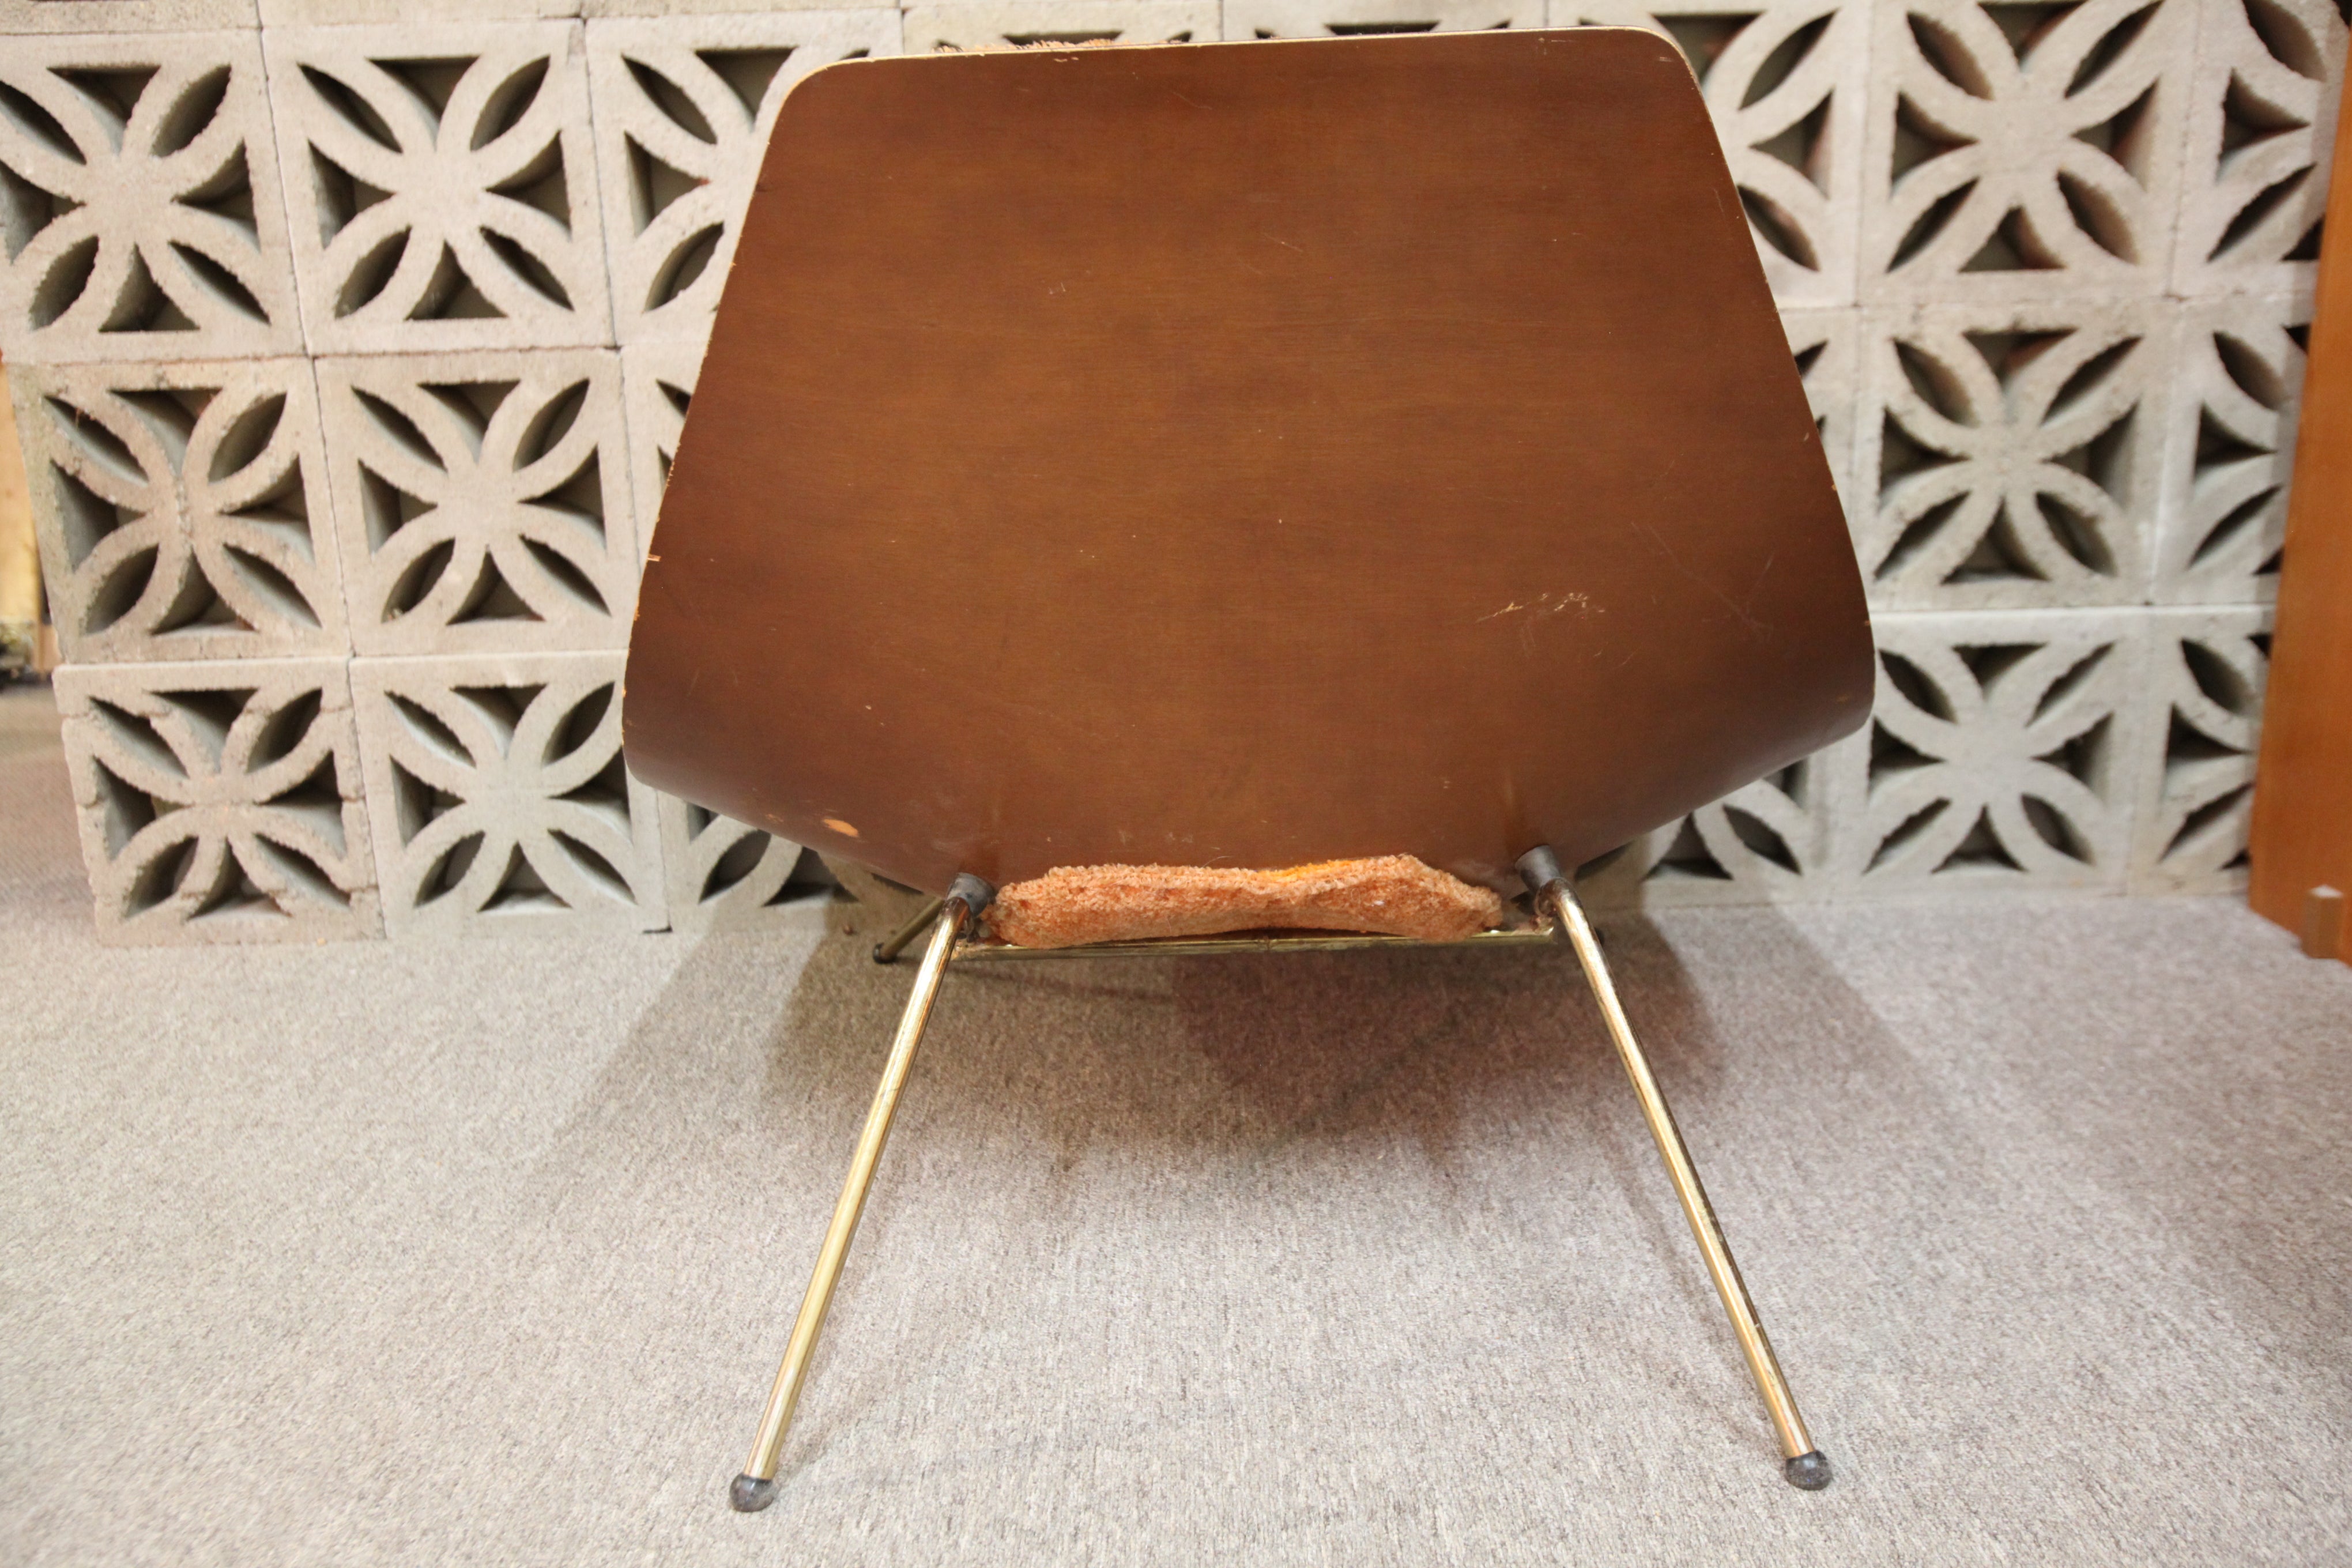 Original Rare! Winnipeg Chairs by James Donahue (33"W x 32"D x 29.5"H)